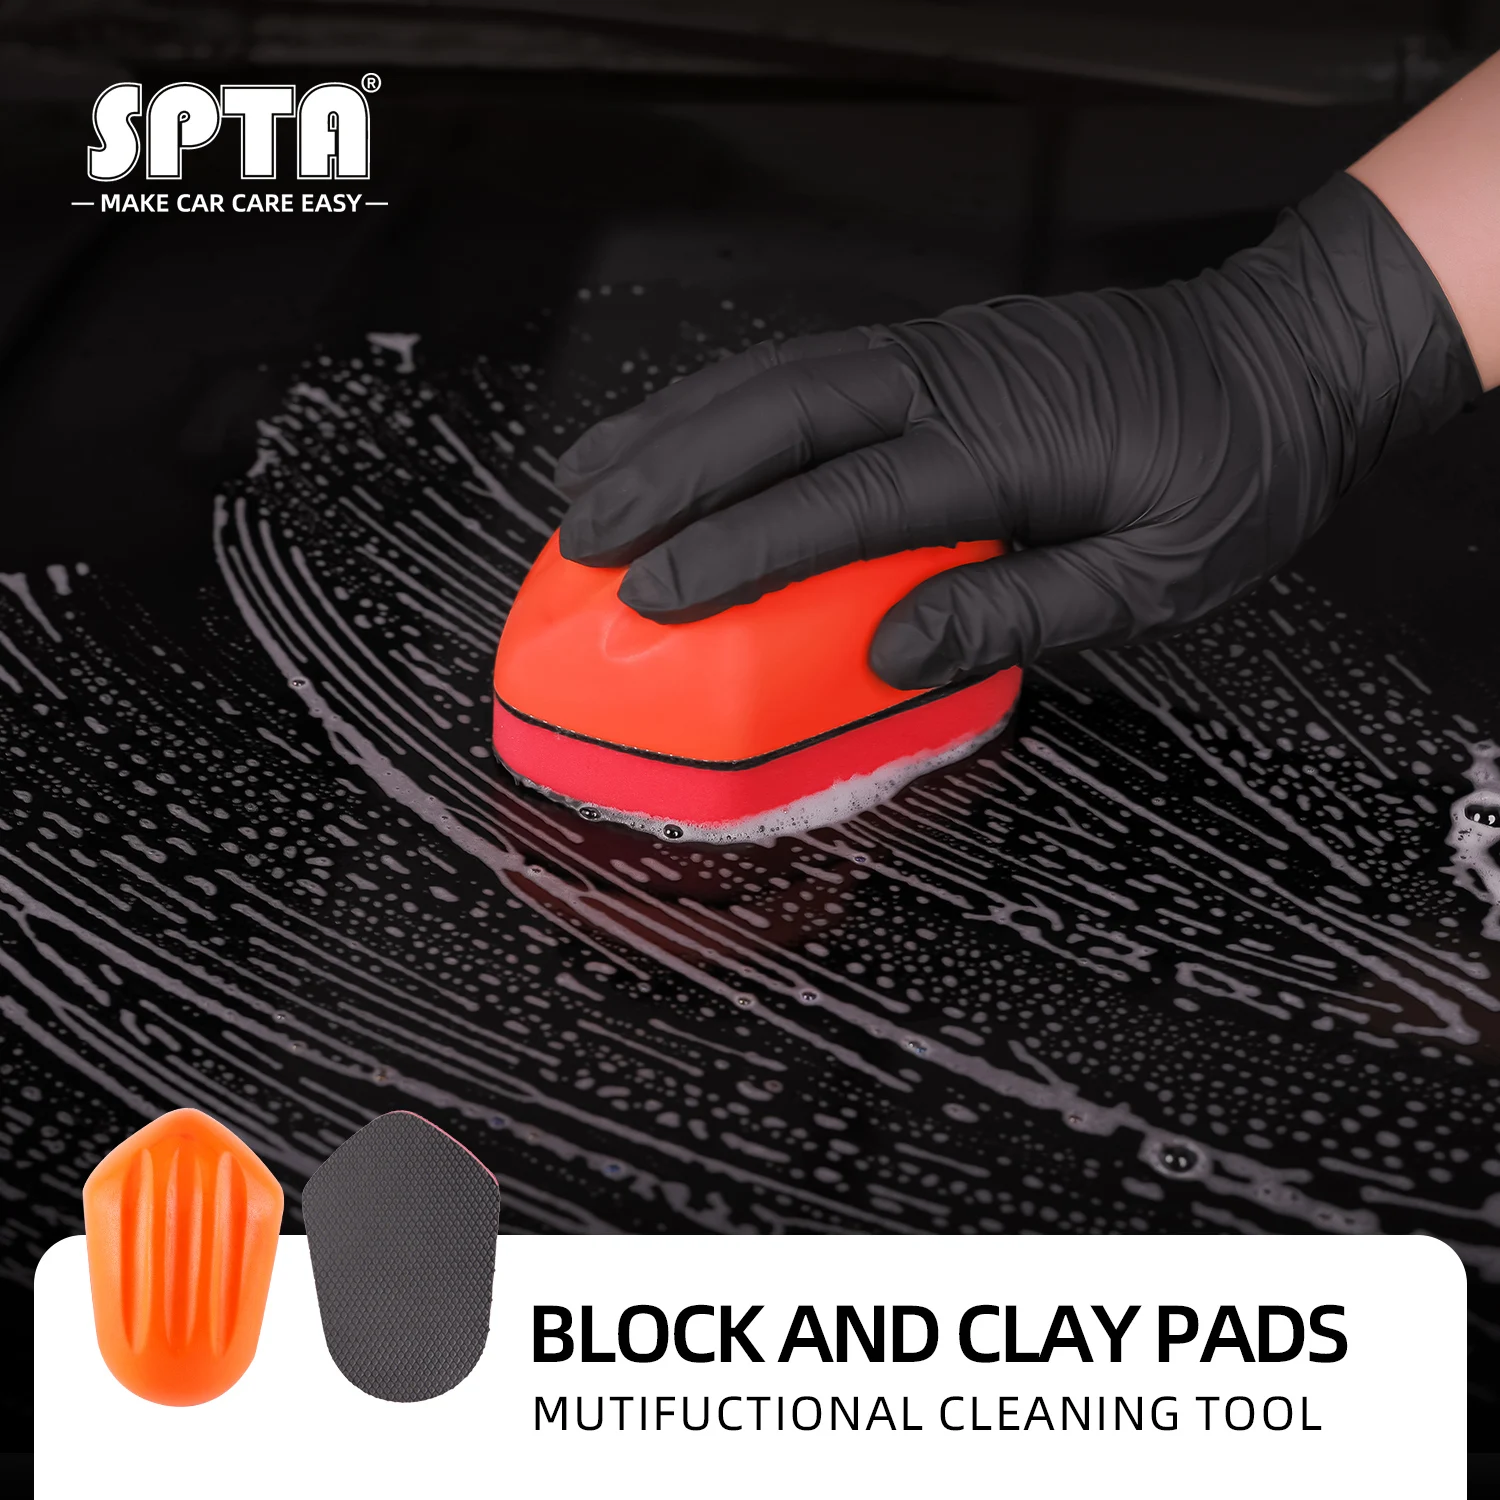 SPTA 3Pcs Car Wash Magic Clay Bar Super Auto Detailing Cleaner Tools  Vehicle Washing Mud Kit Car Styling - AliExpress